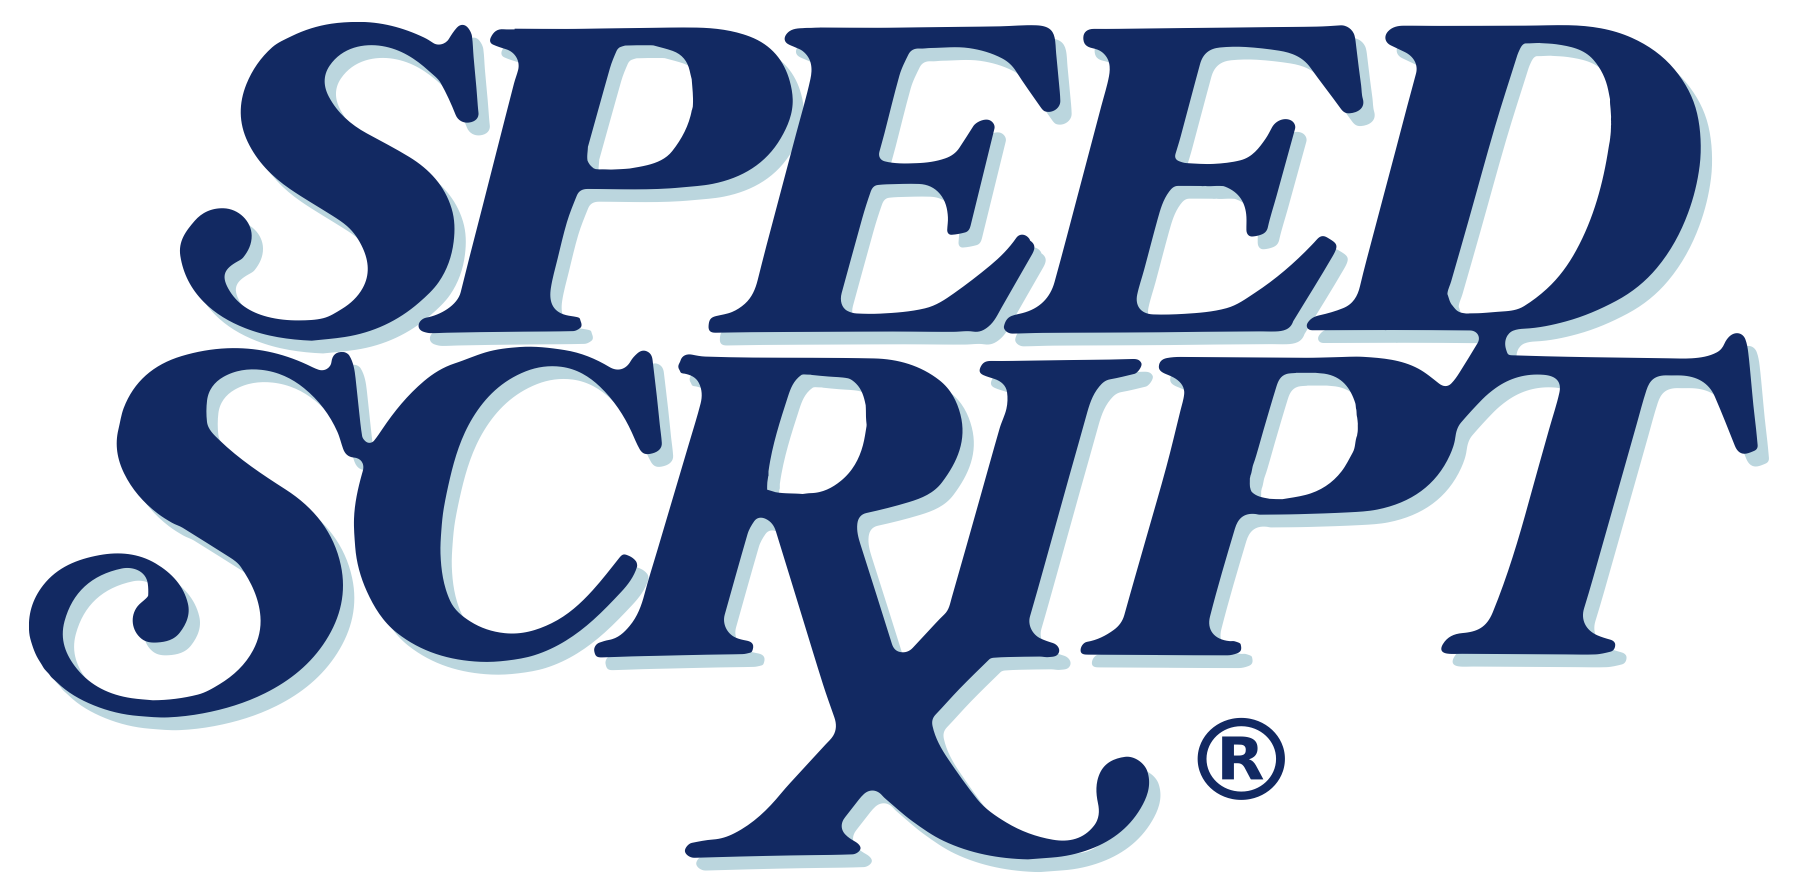 2020 Buyers Guide Logos Speed Script